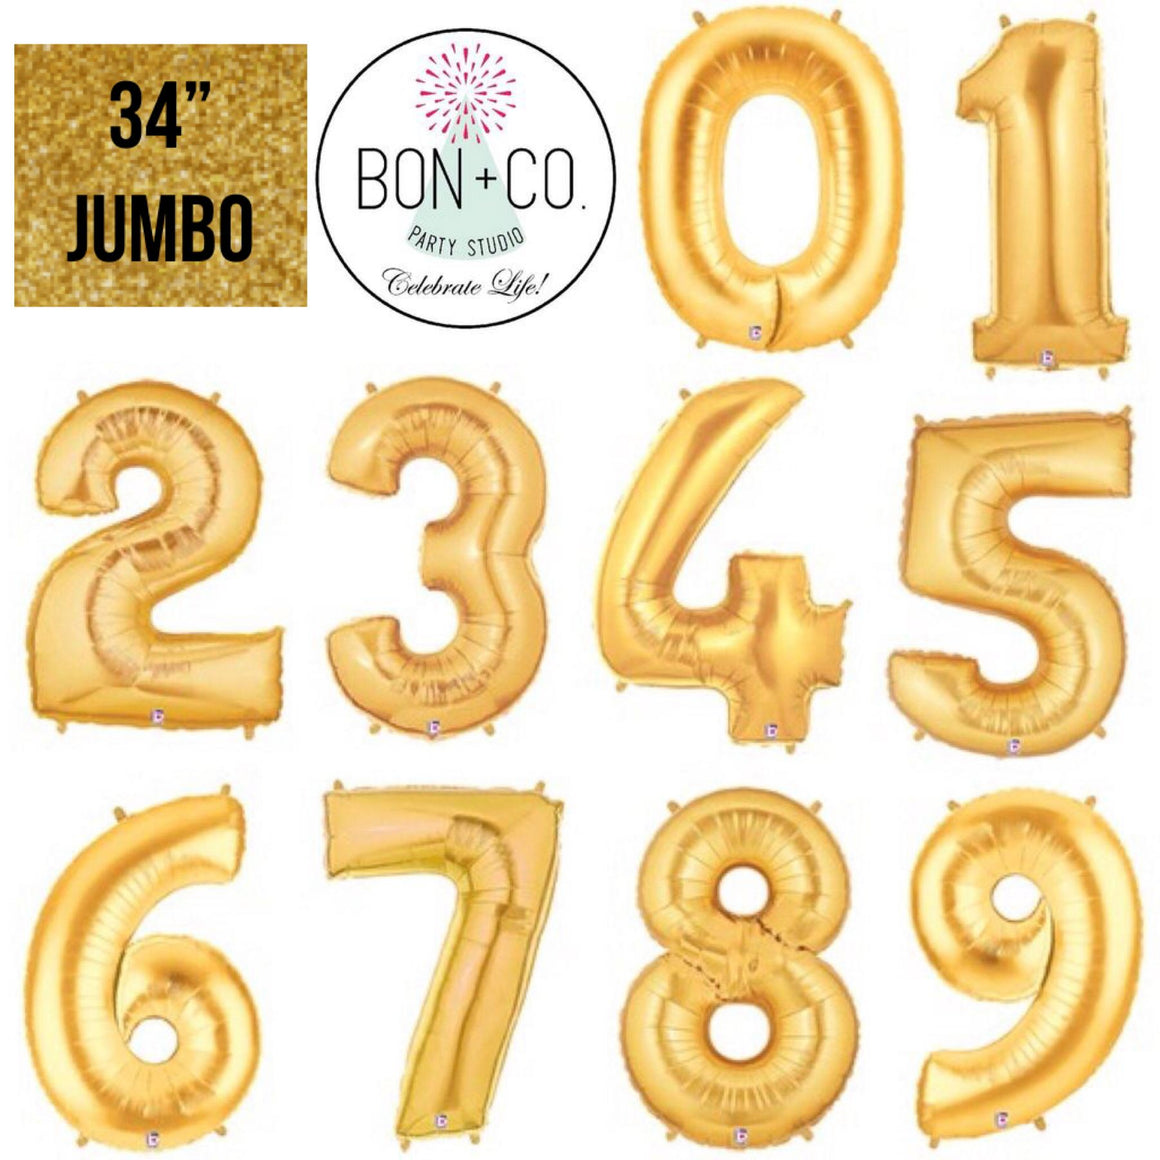 BALLOON BAR - 34" JUMBO NUMBER GOLD, Balloons, Anagram - Bon + Co. Party Studio